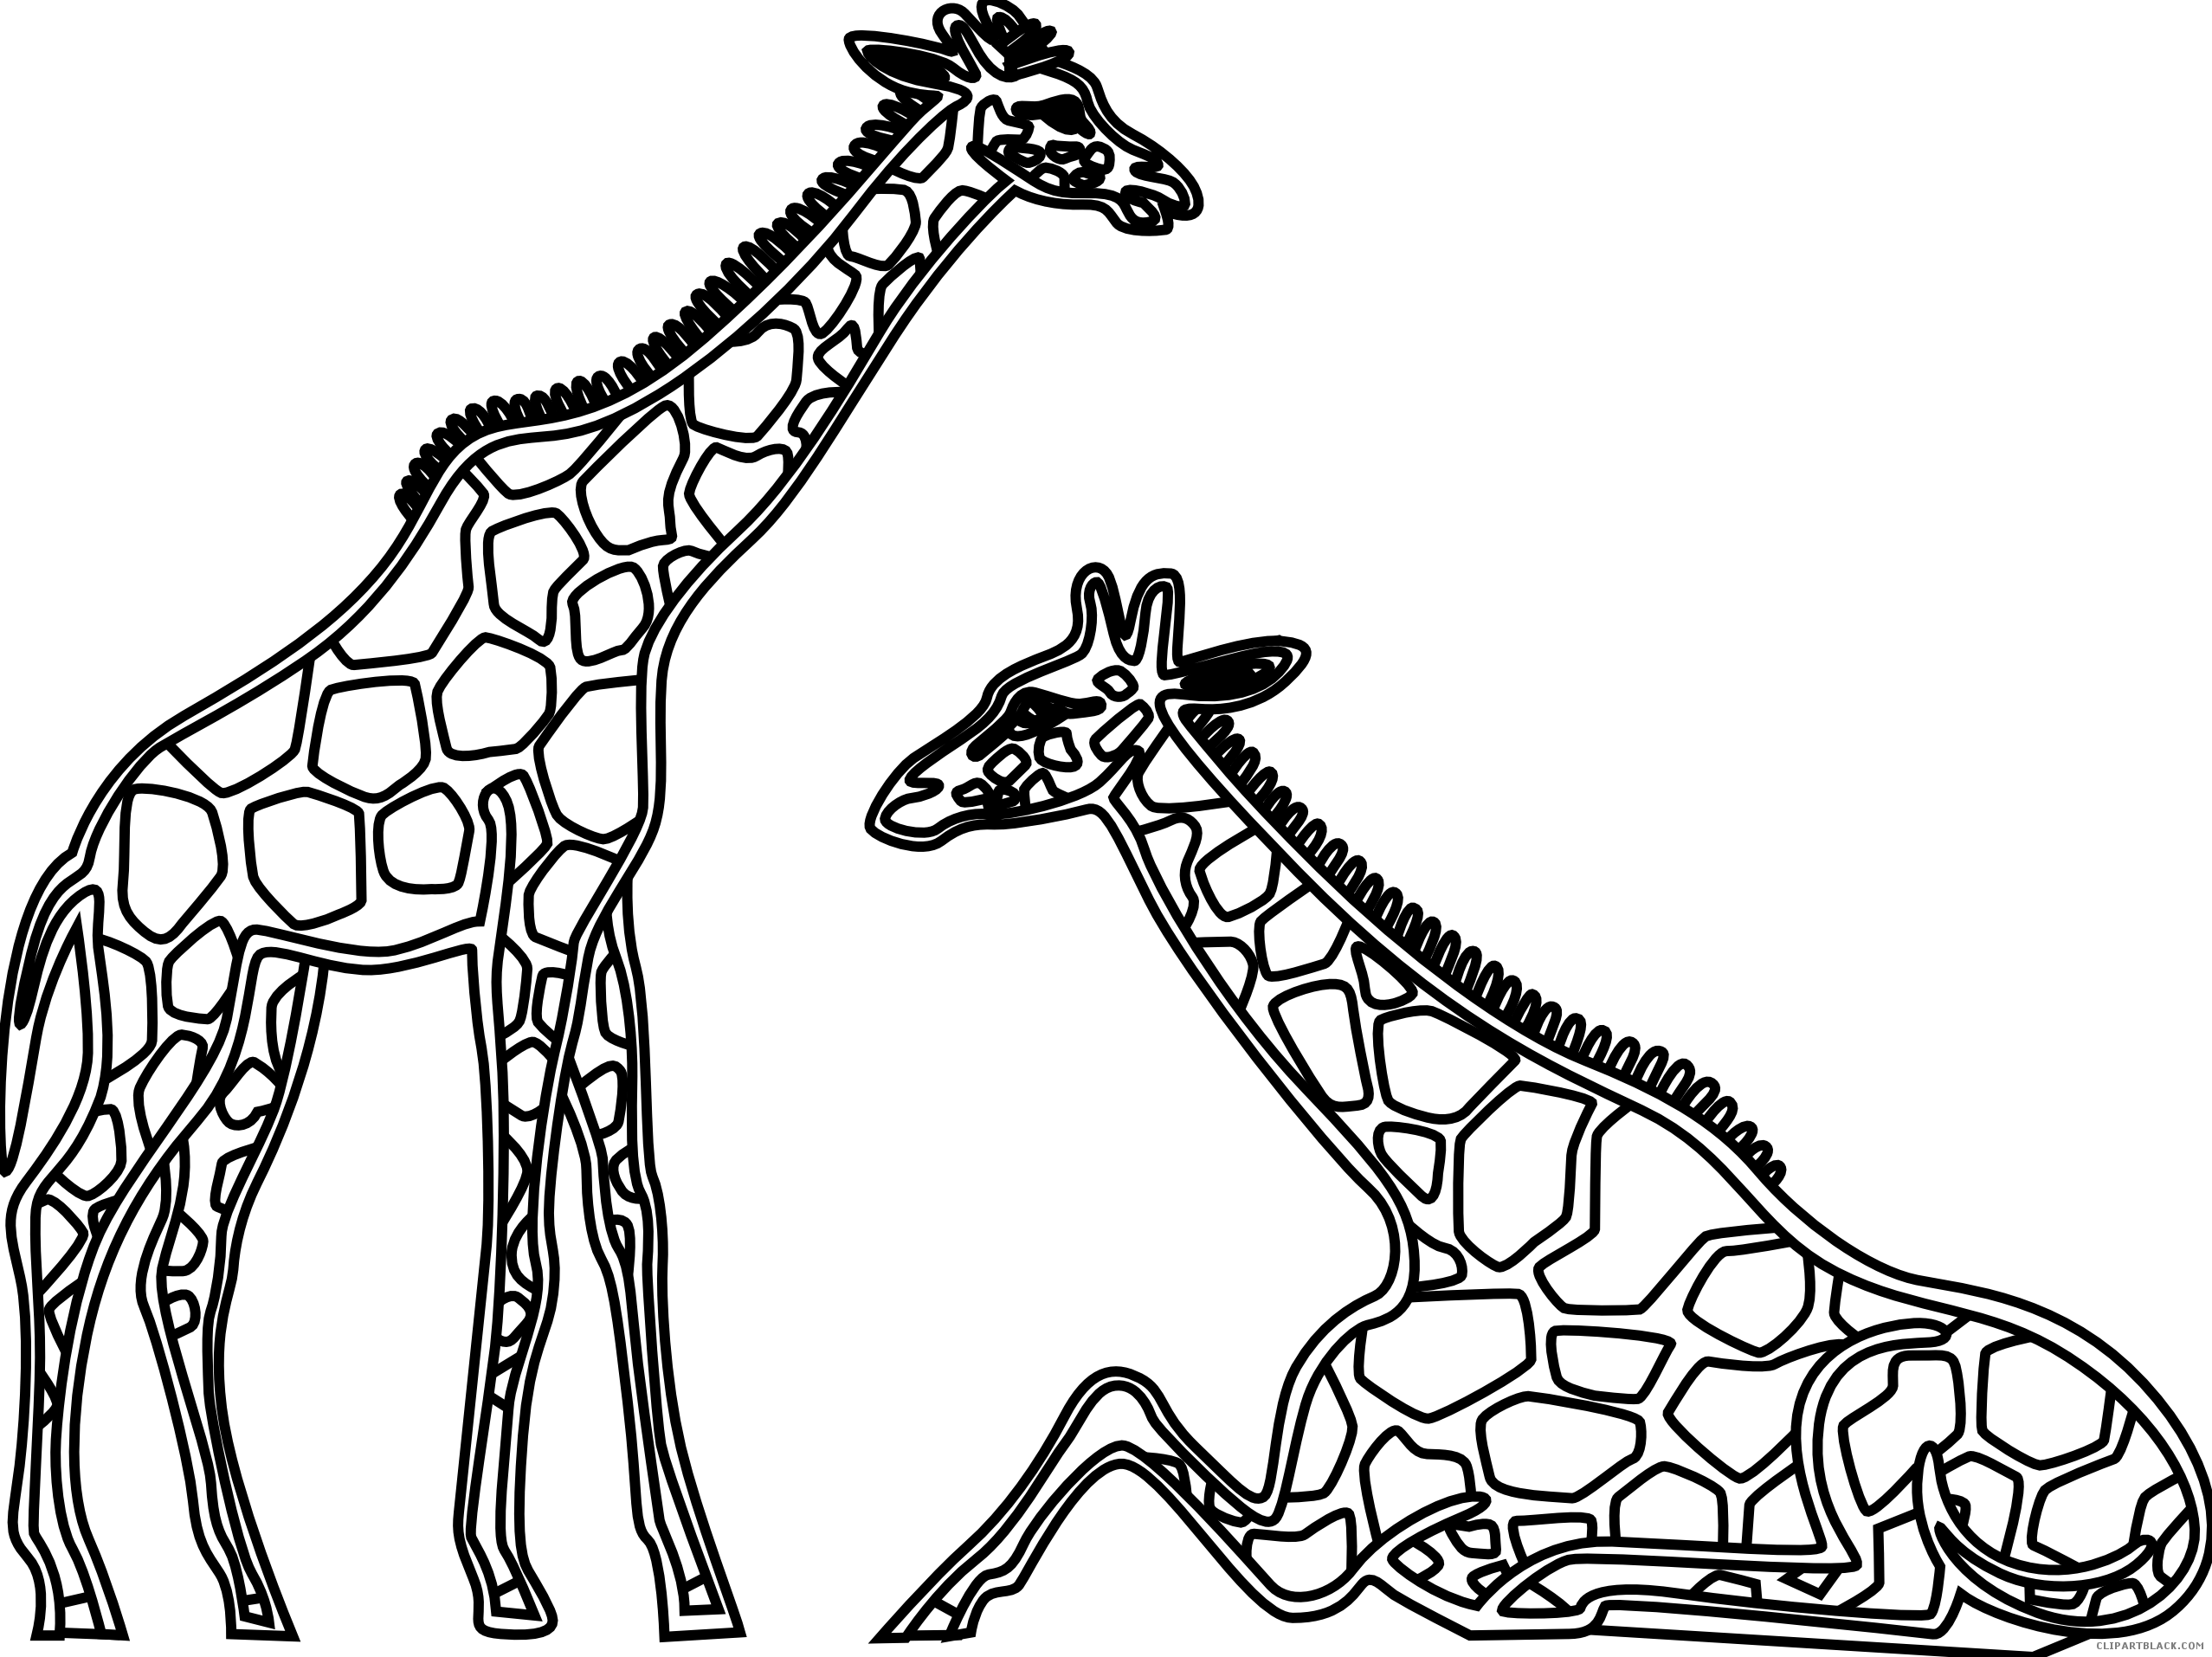 Clipart giraffe 2 giraffe. Black and white page